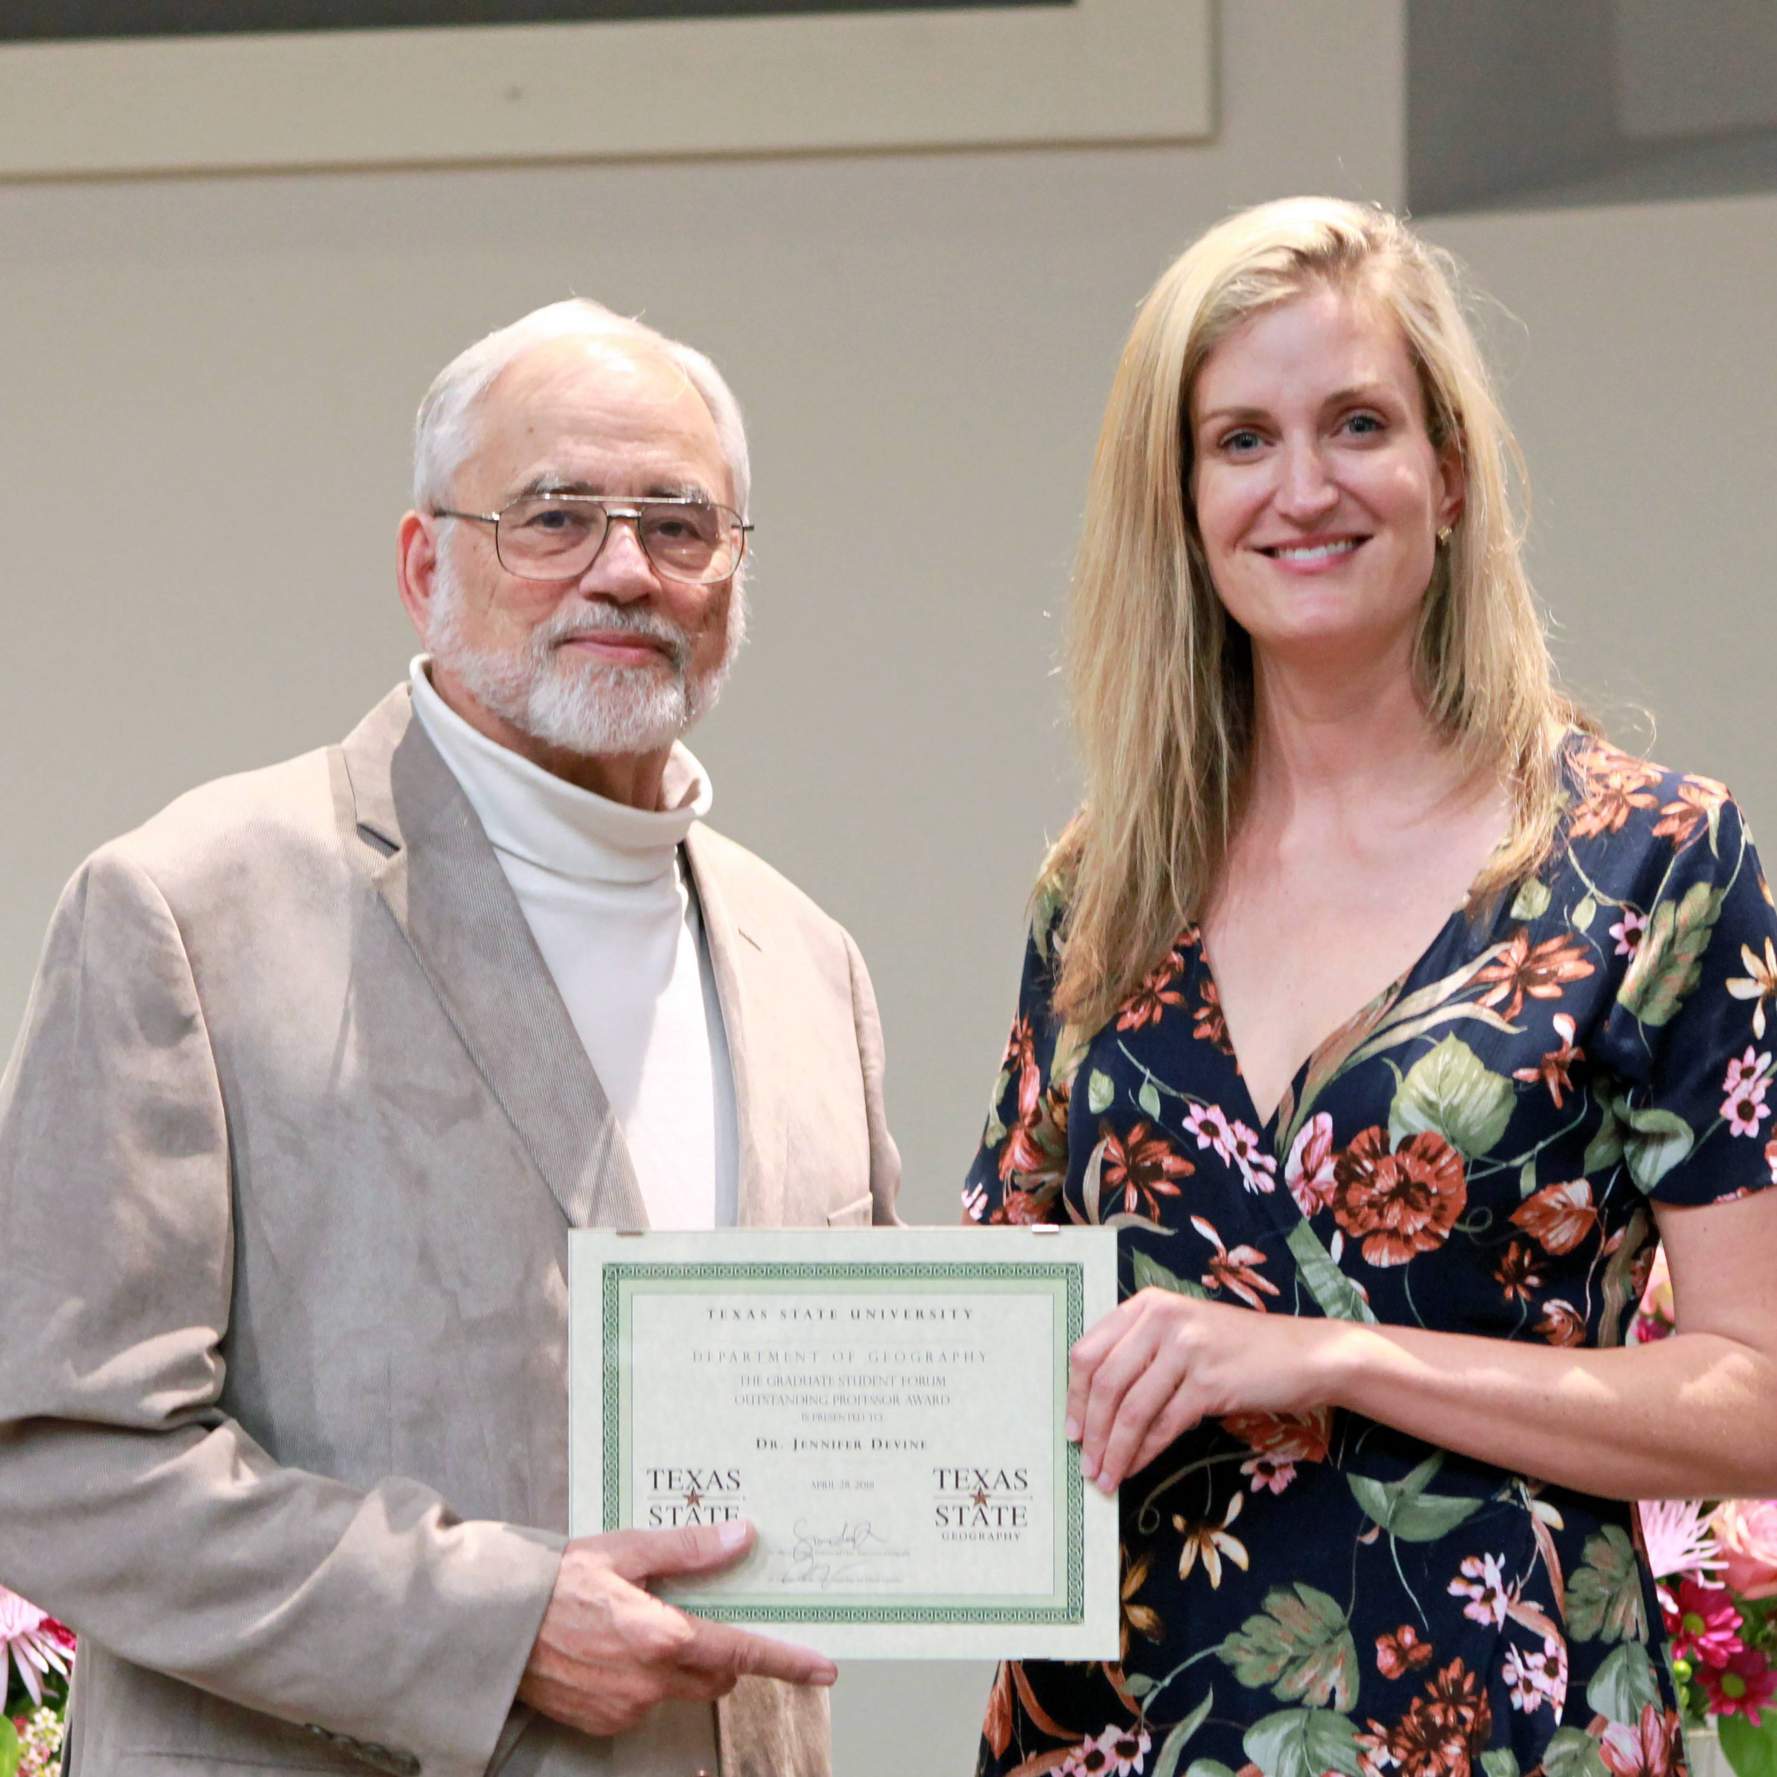 Jennifer Devine Graduate Student Forum Outstanding Professor Award